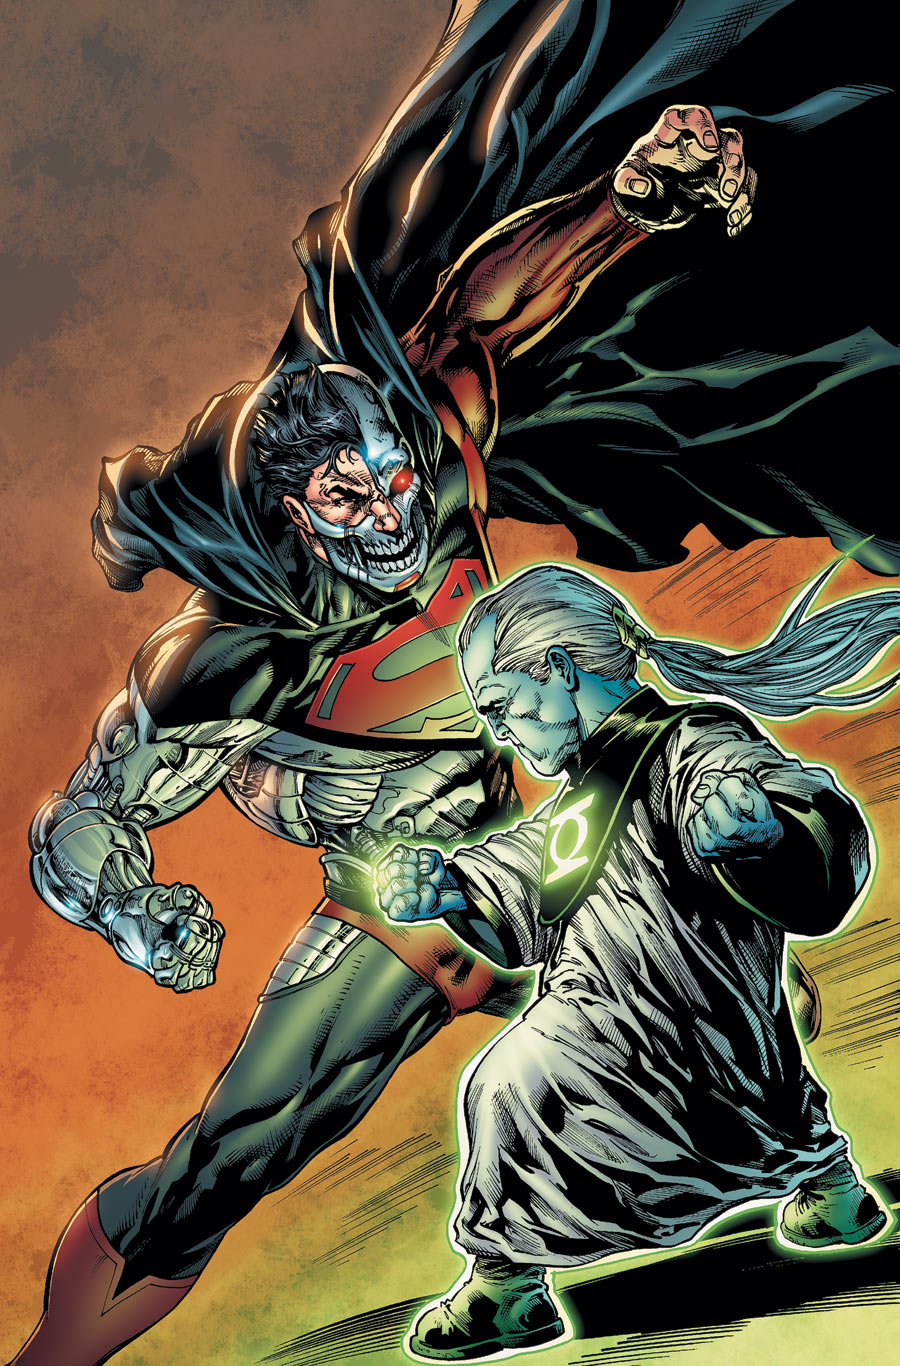 Green Lantern Corps #52